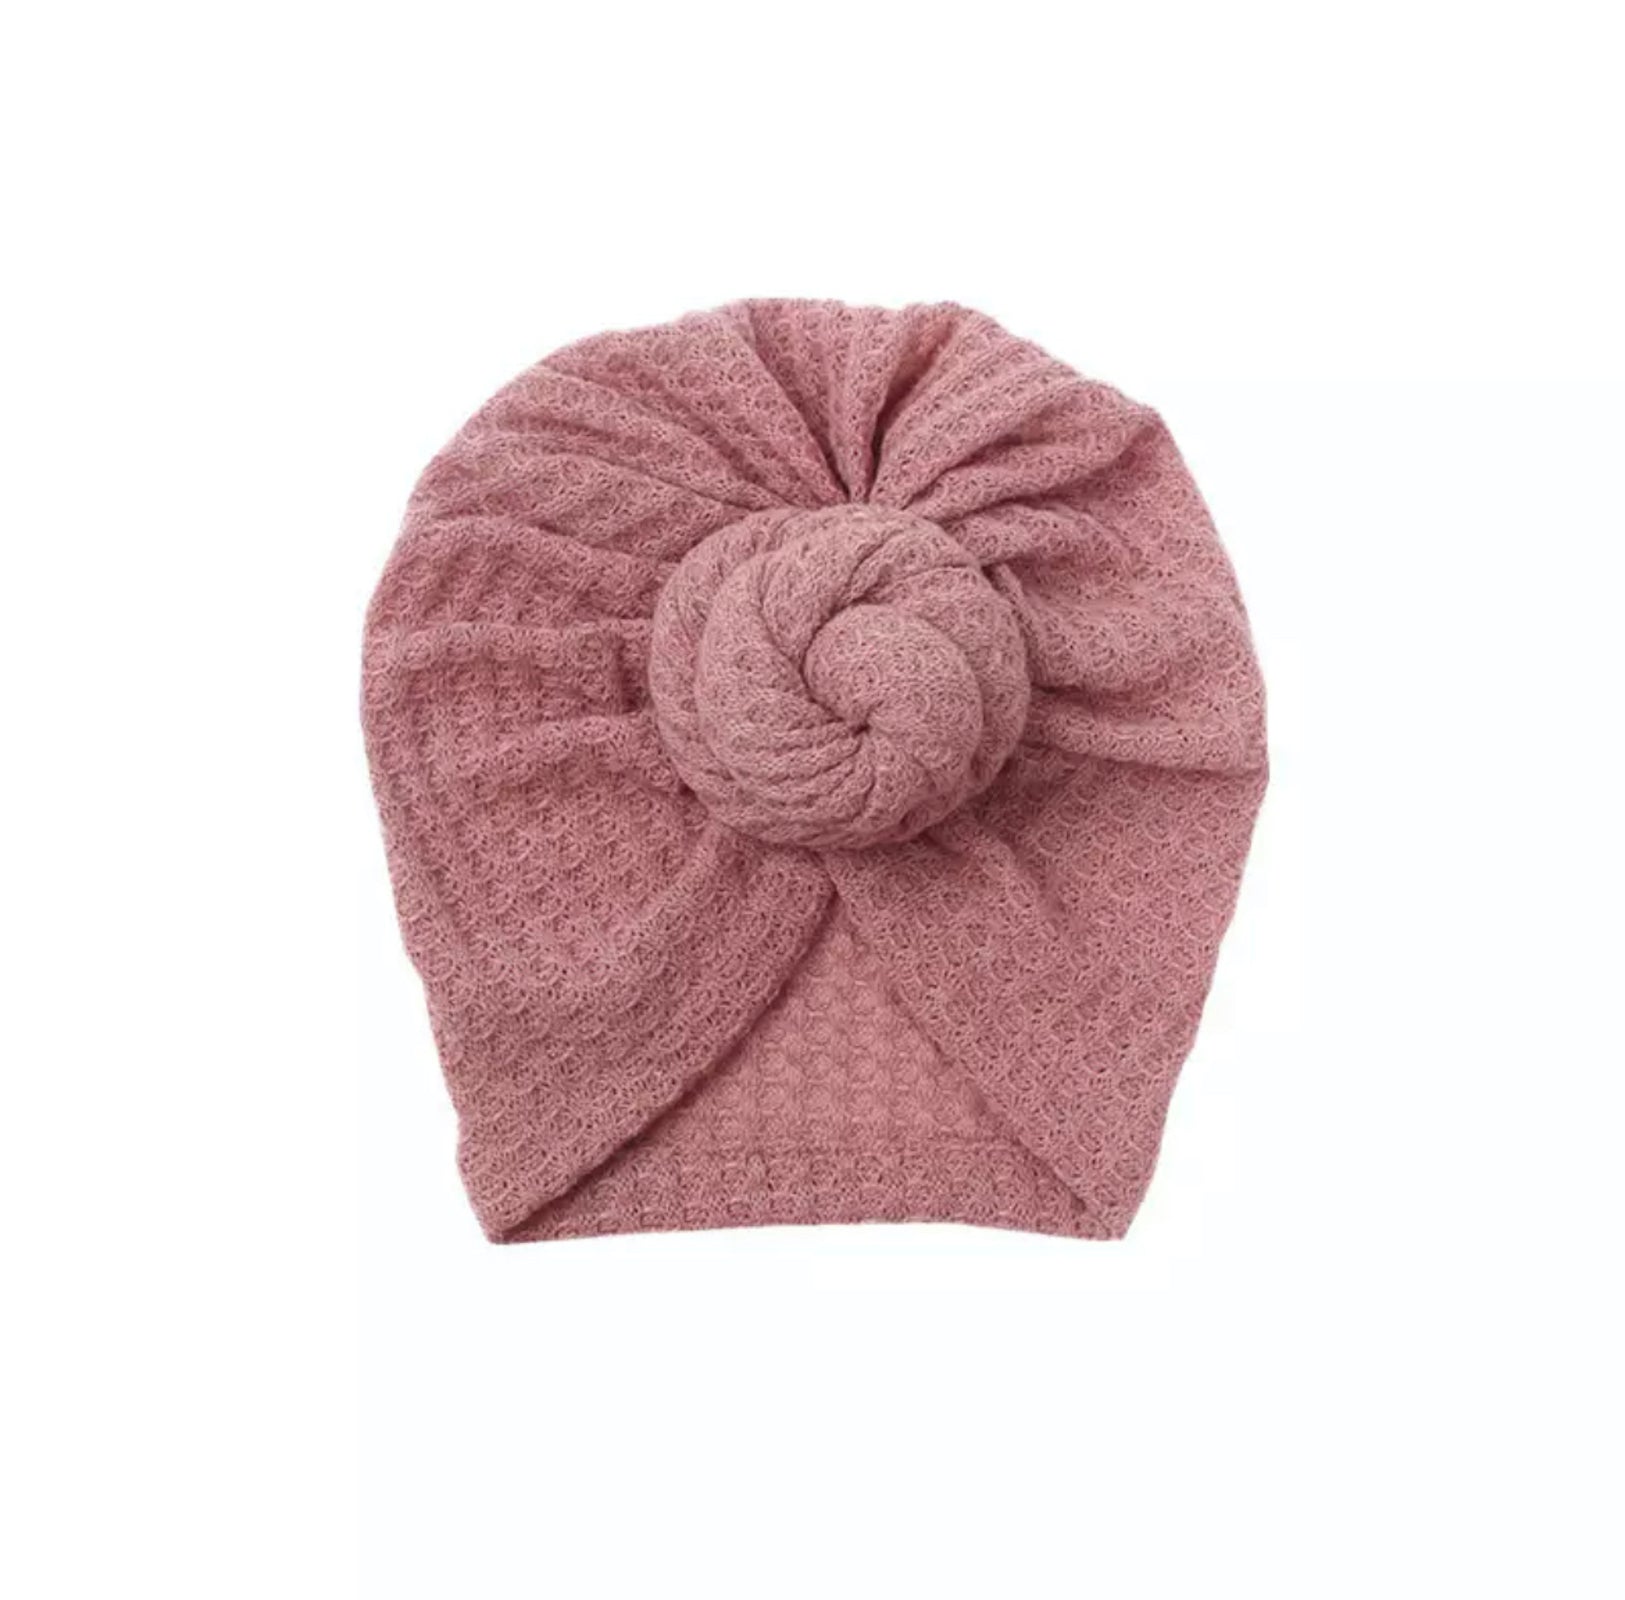 Blush Baby Turbant Cotton Hat One Size